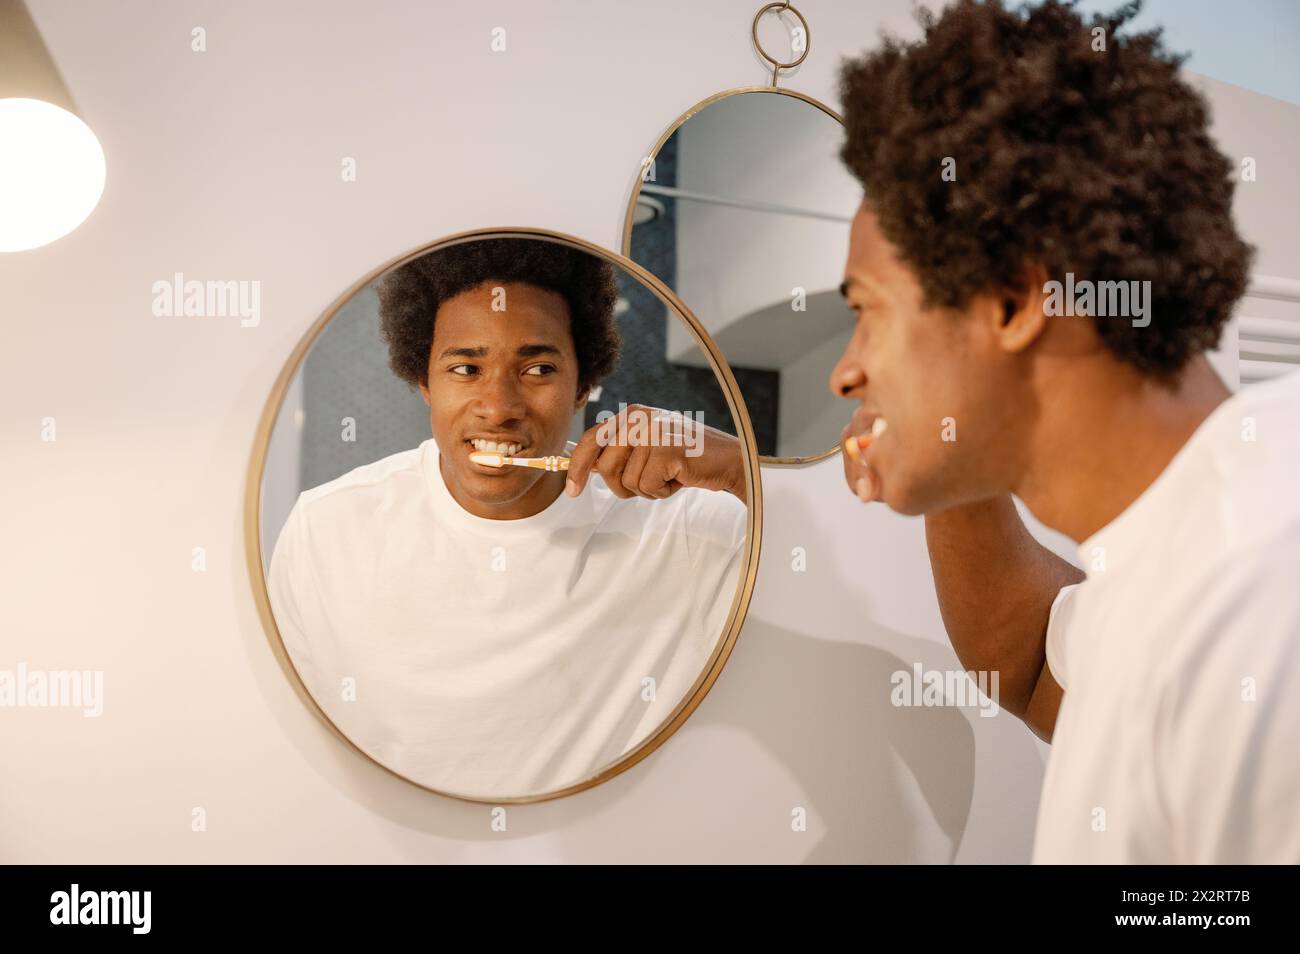 Man brushing teeth looking at mirror reflection in bathroom Stock Photo